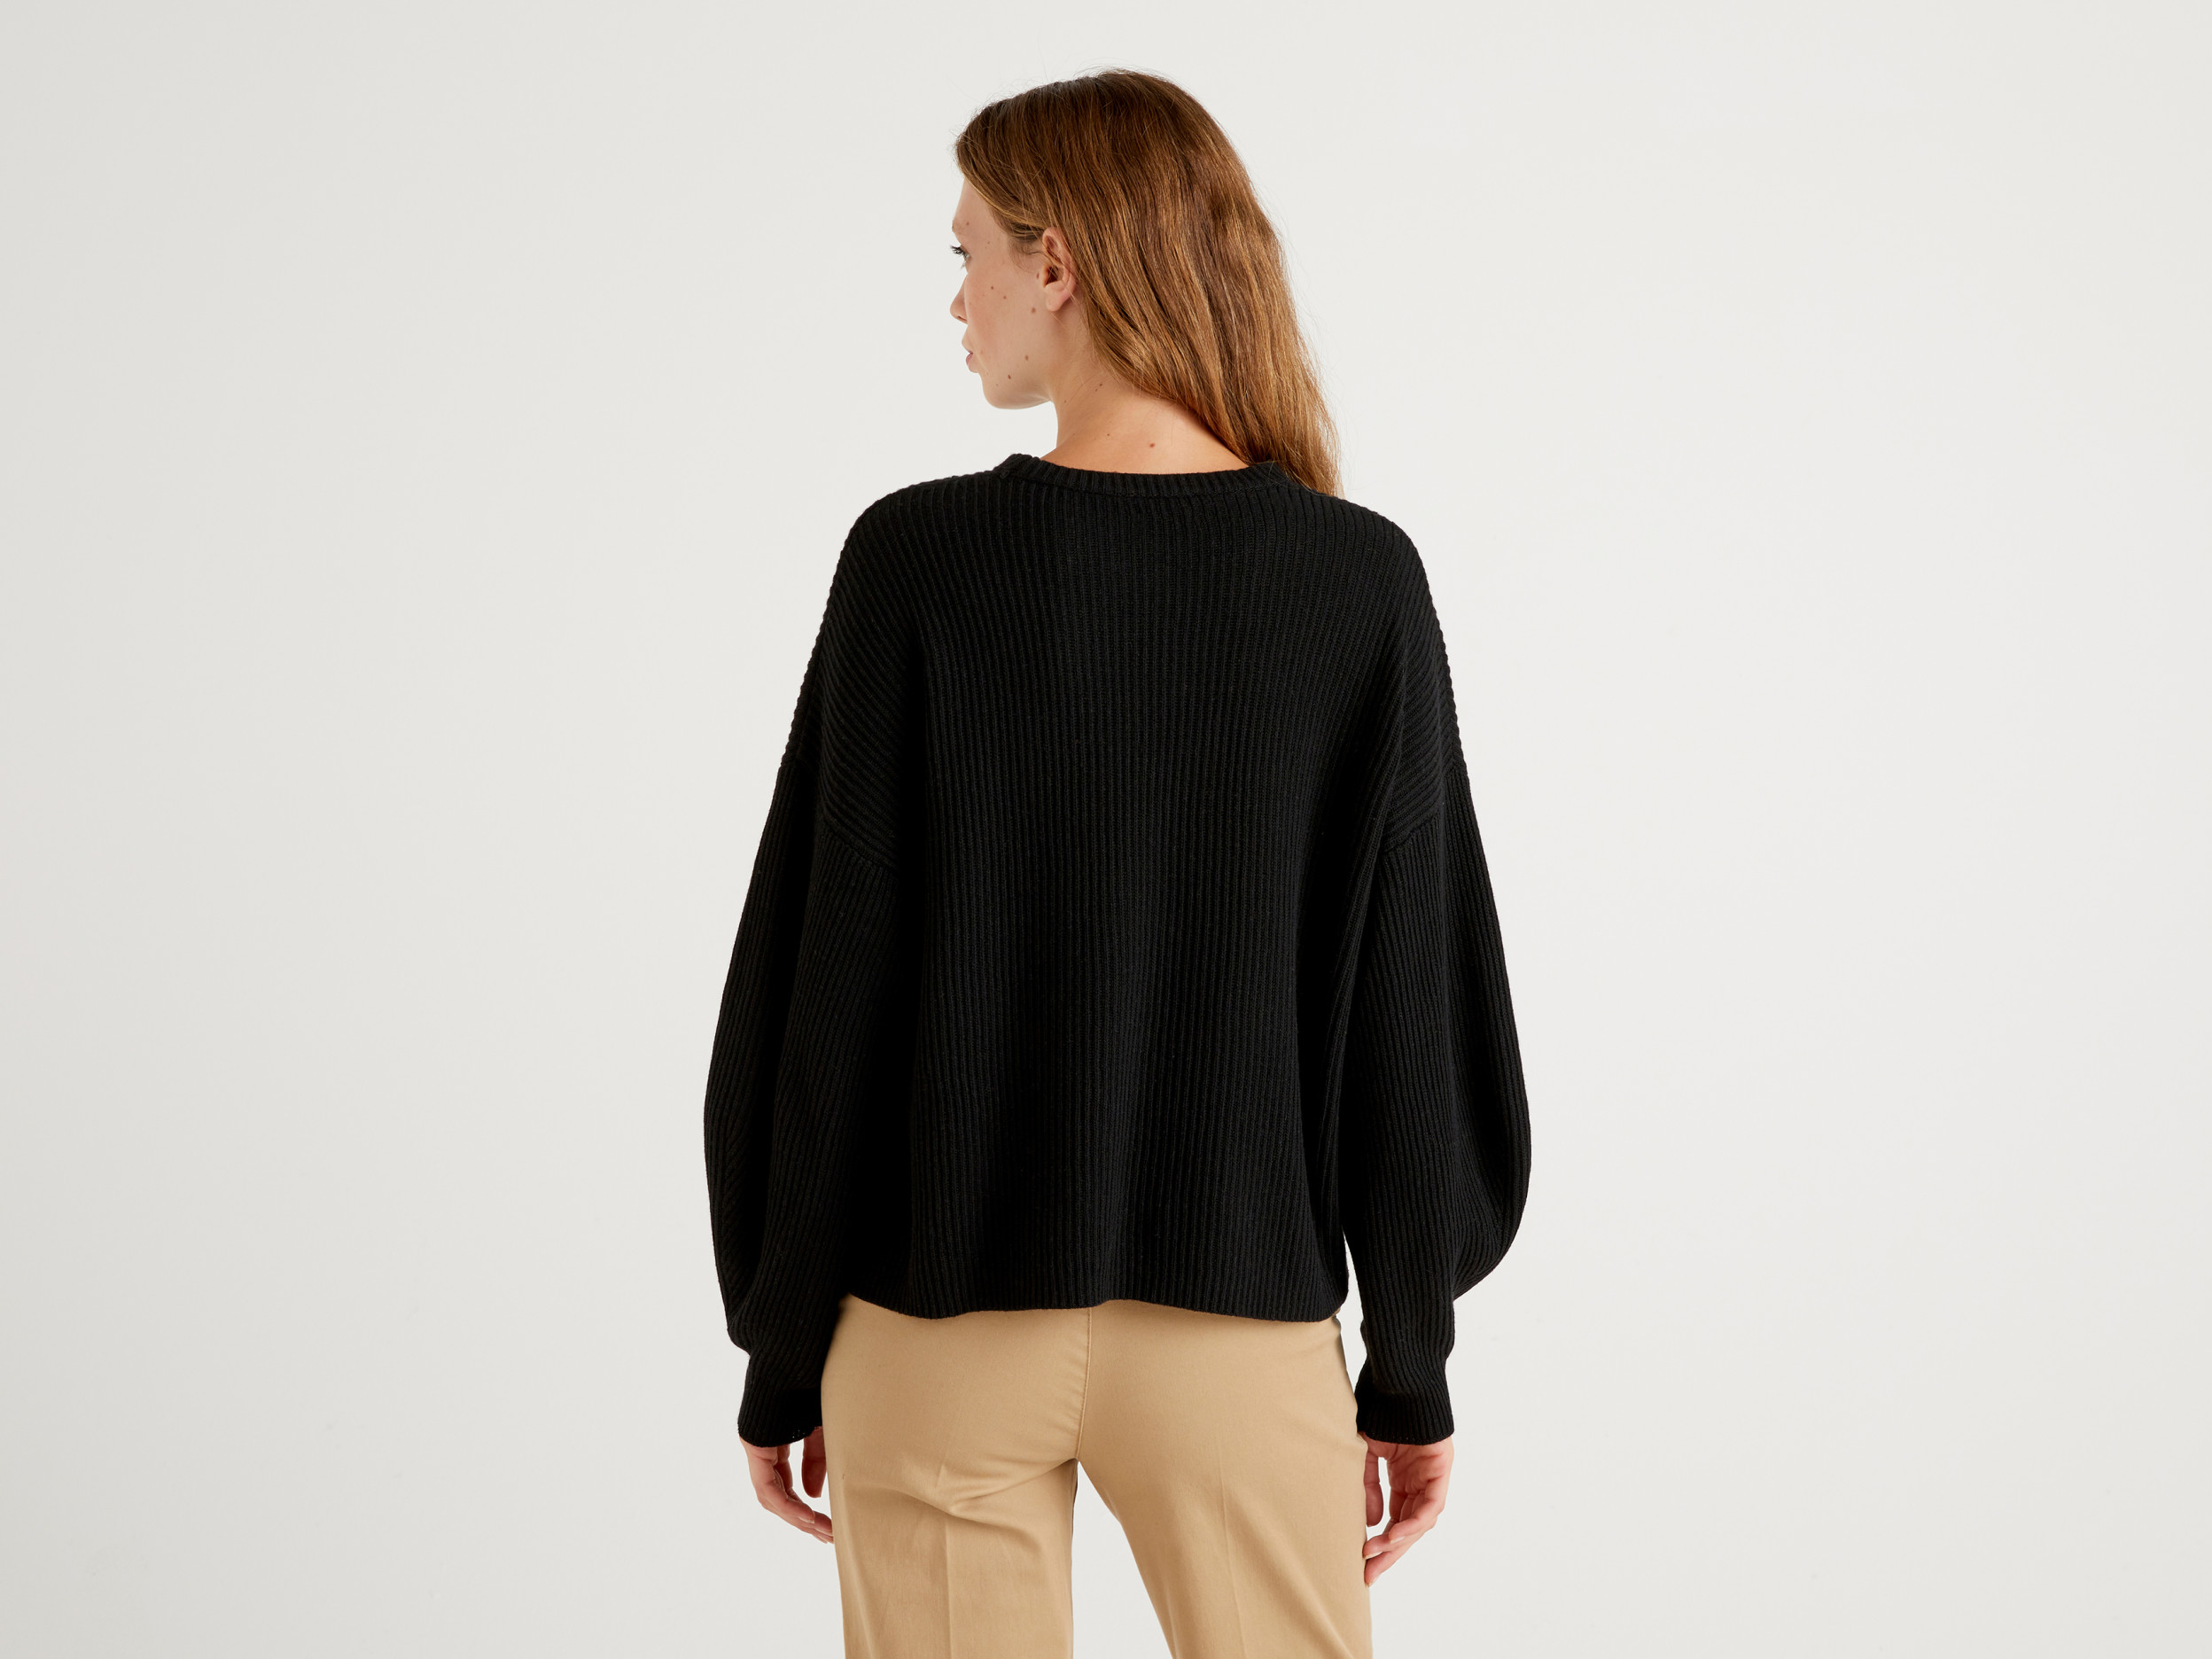 Benetton, Soft Sweater With Slit Pattern, Taglia L-Xl, Black, Women